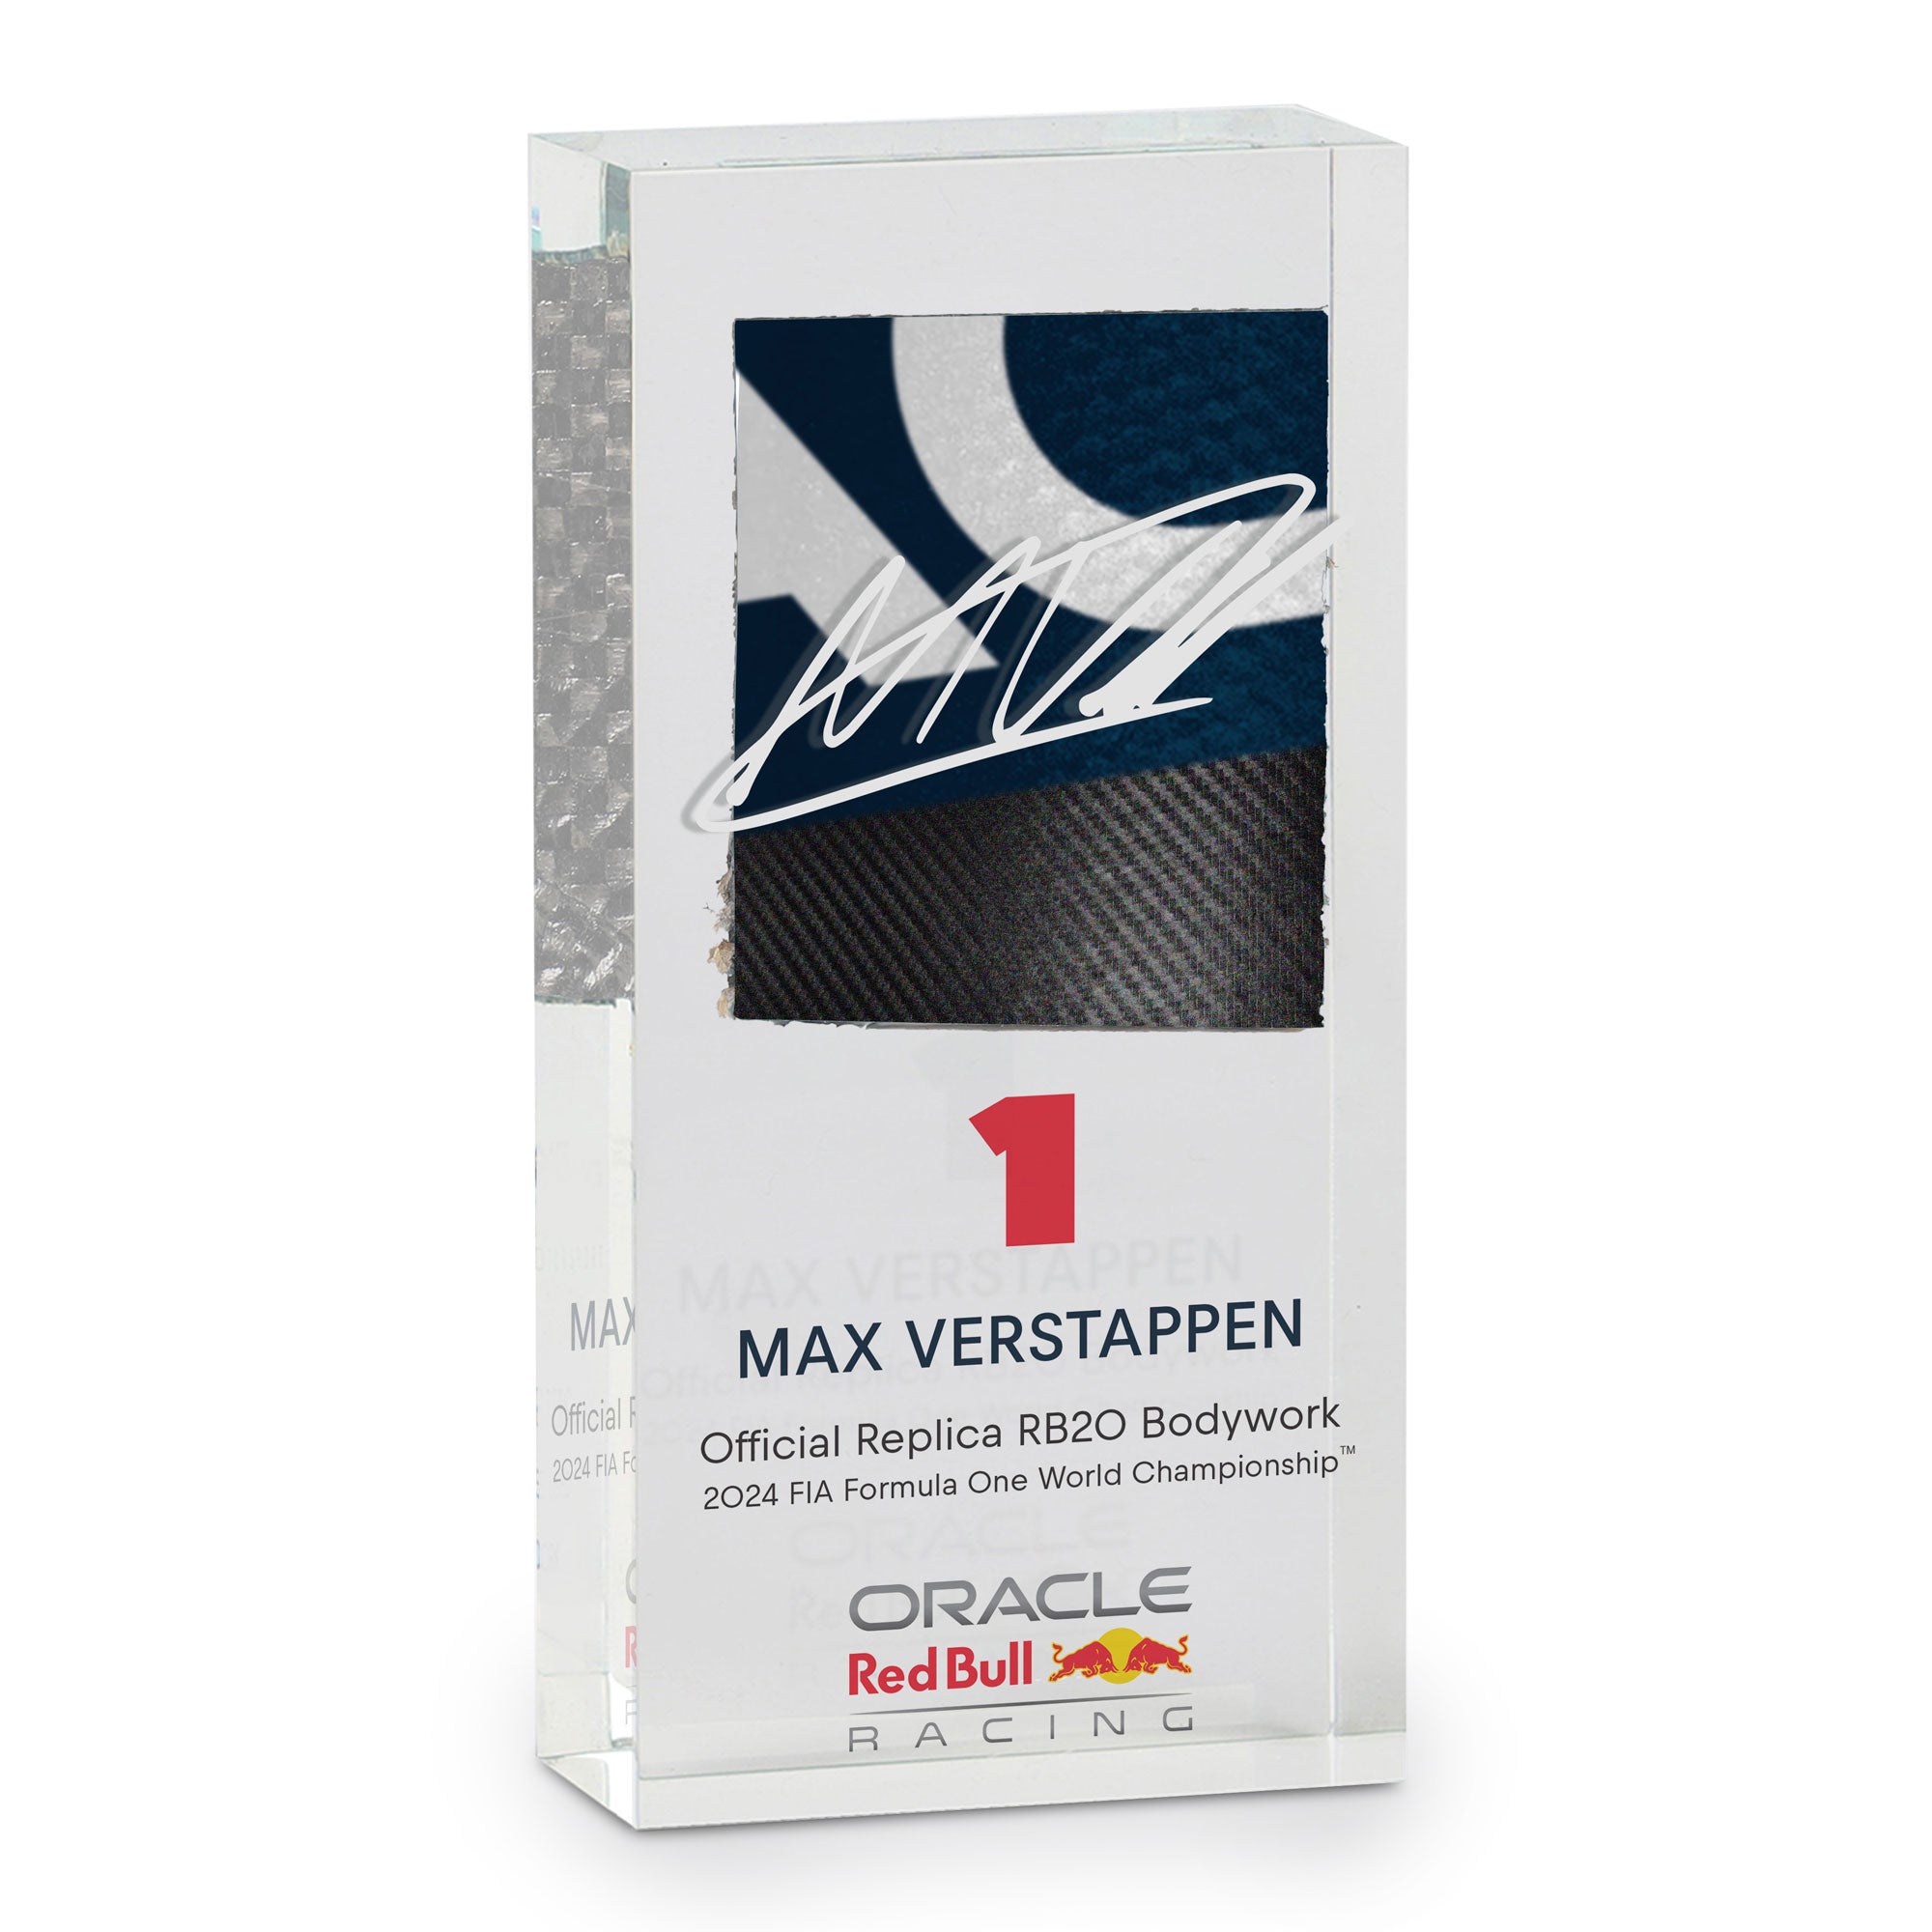 Max Verstappen 2024 Oracle Red Bull Racing Replica Bodywork in Acrylic